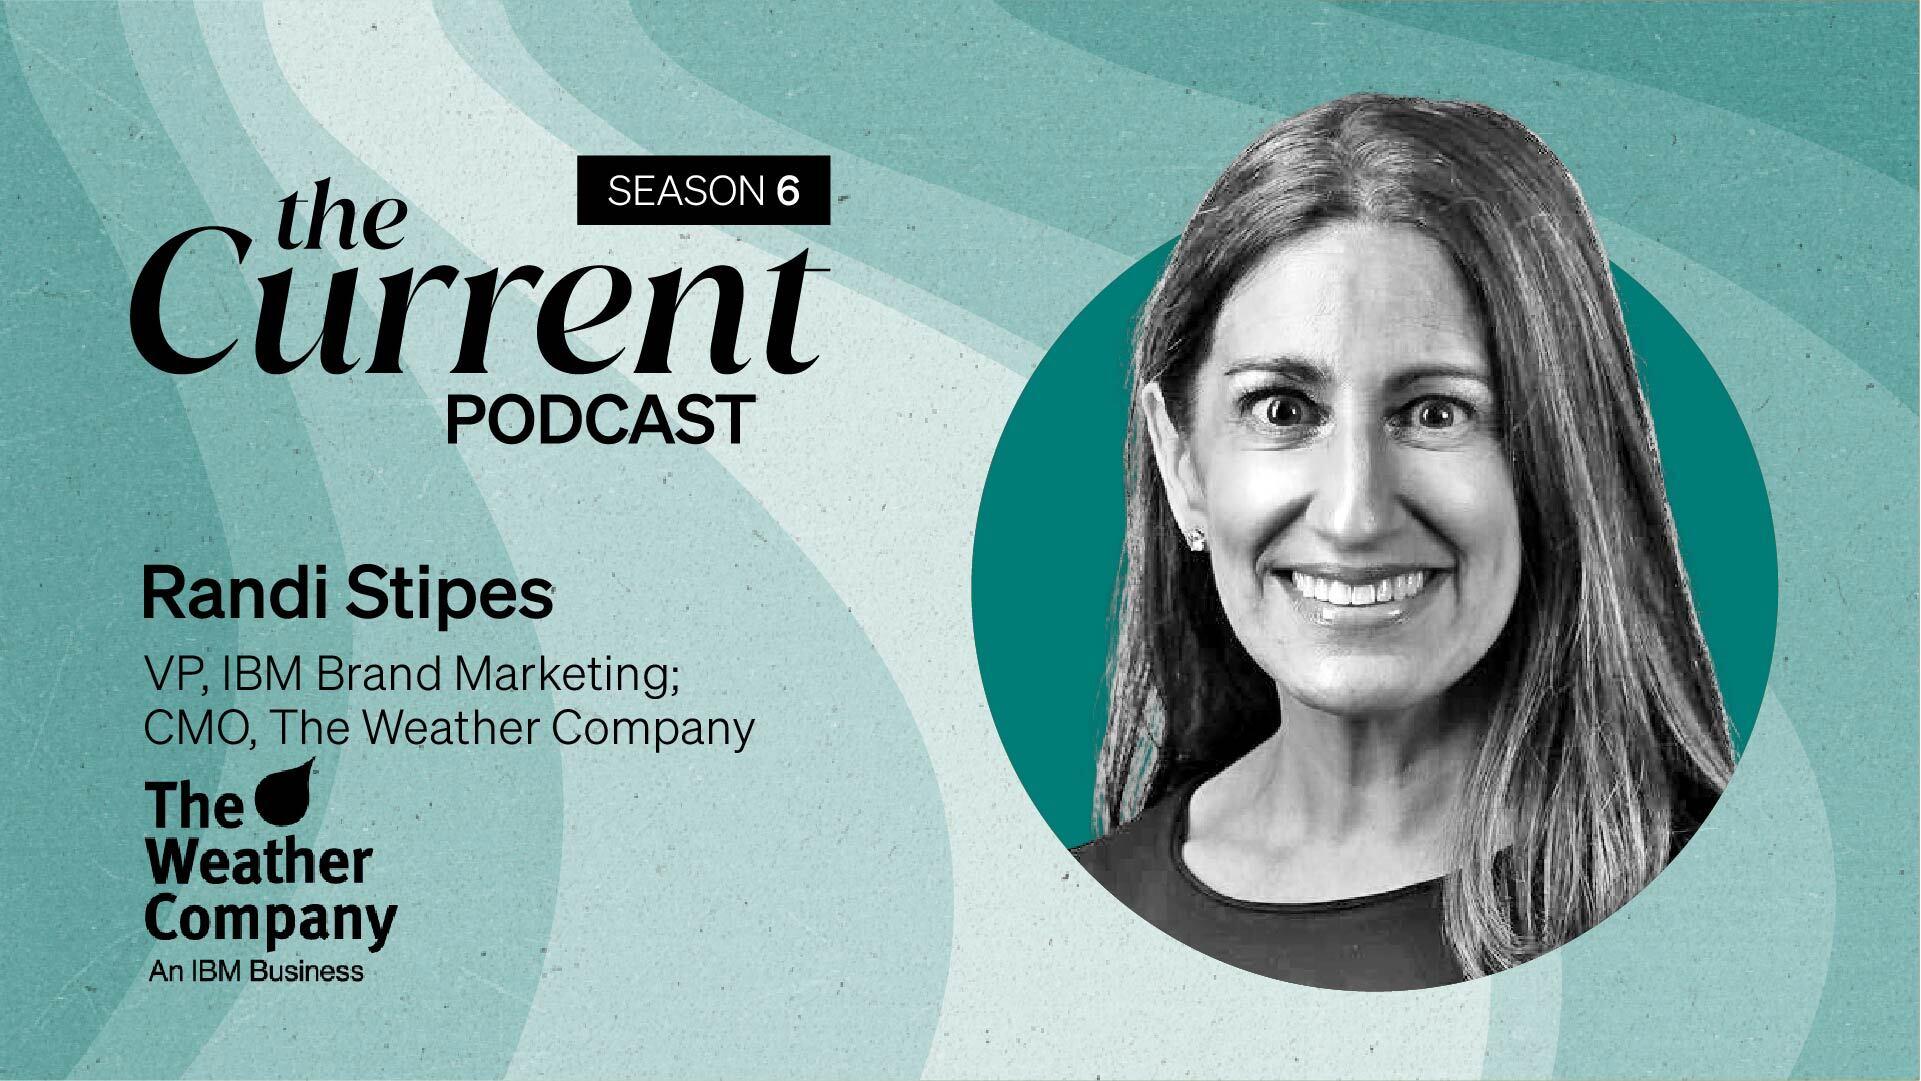 The Current Podcast, Season 6: Randi Stipes, VP, IBM Brand Marketing, CMO, The Weather Company